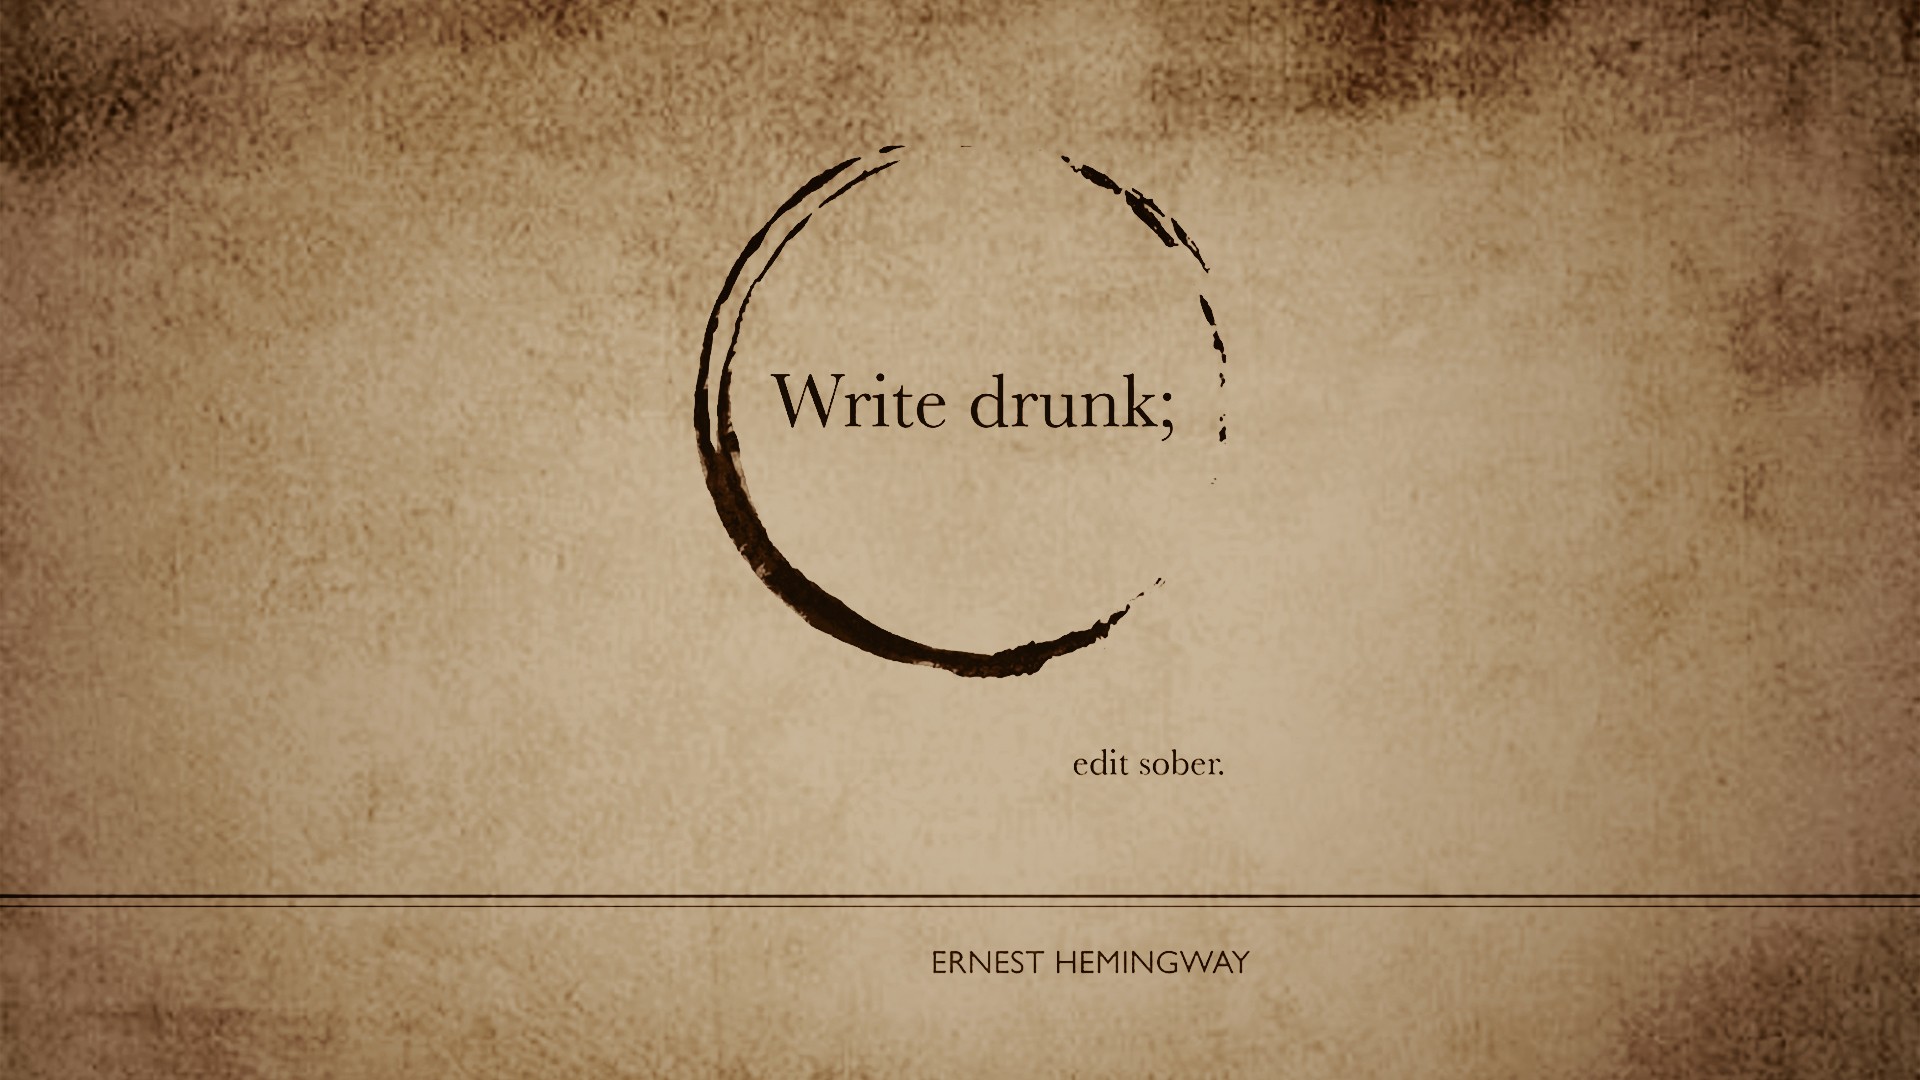 Book Quotes Ernest Hemingway Artwork Quote Misattributed Quotes 1920x1080